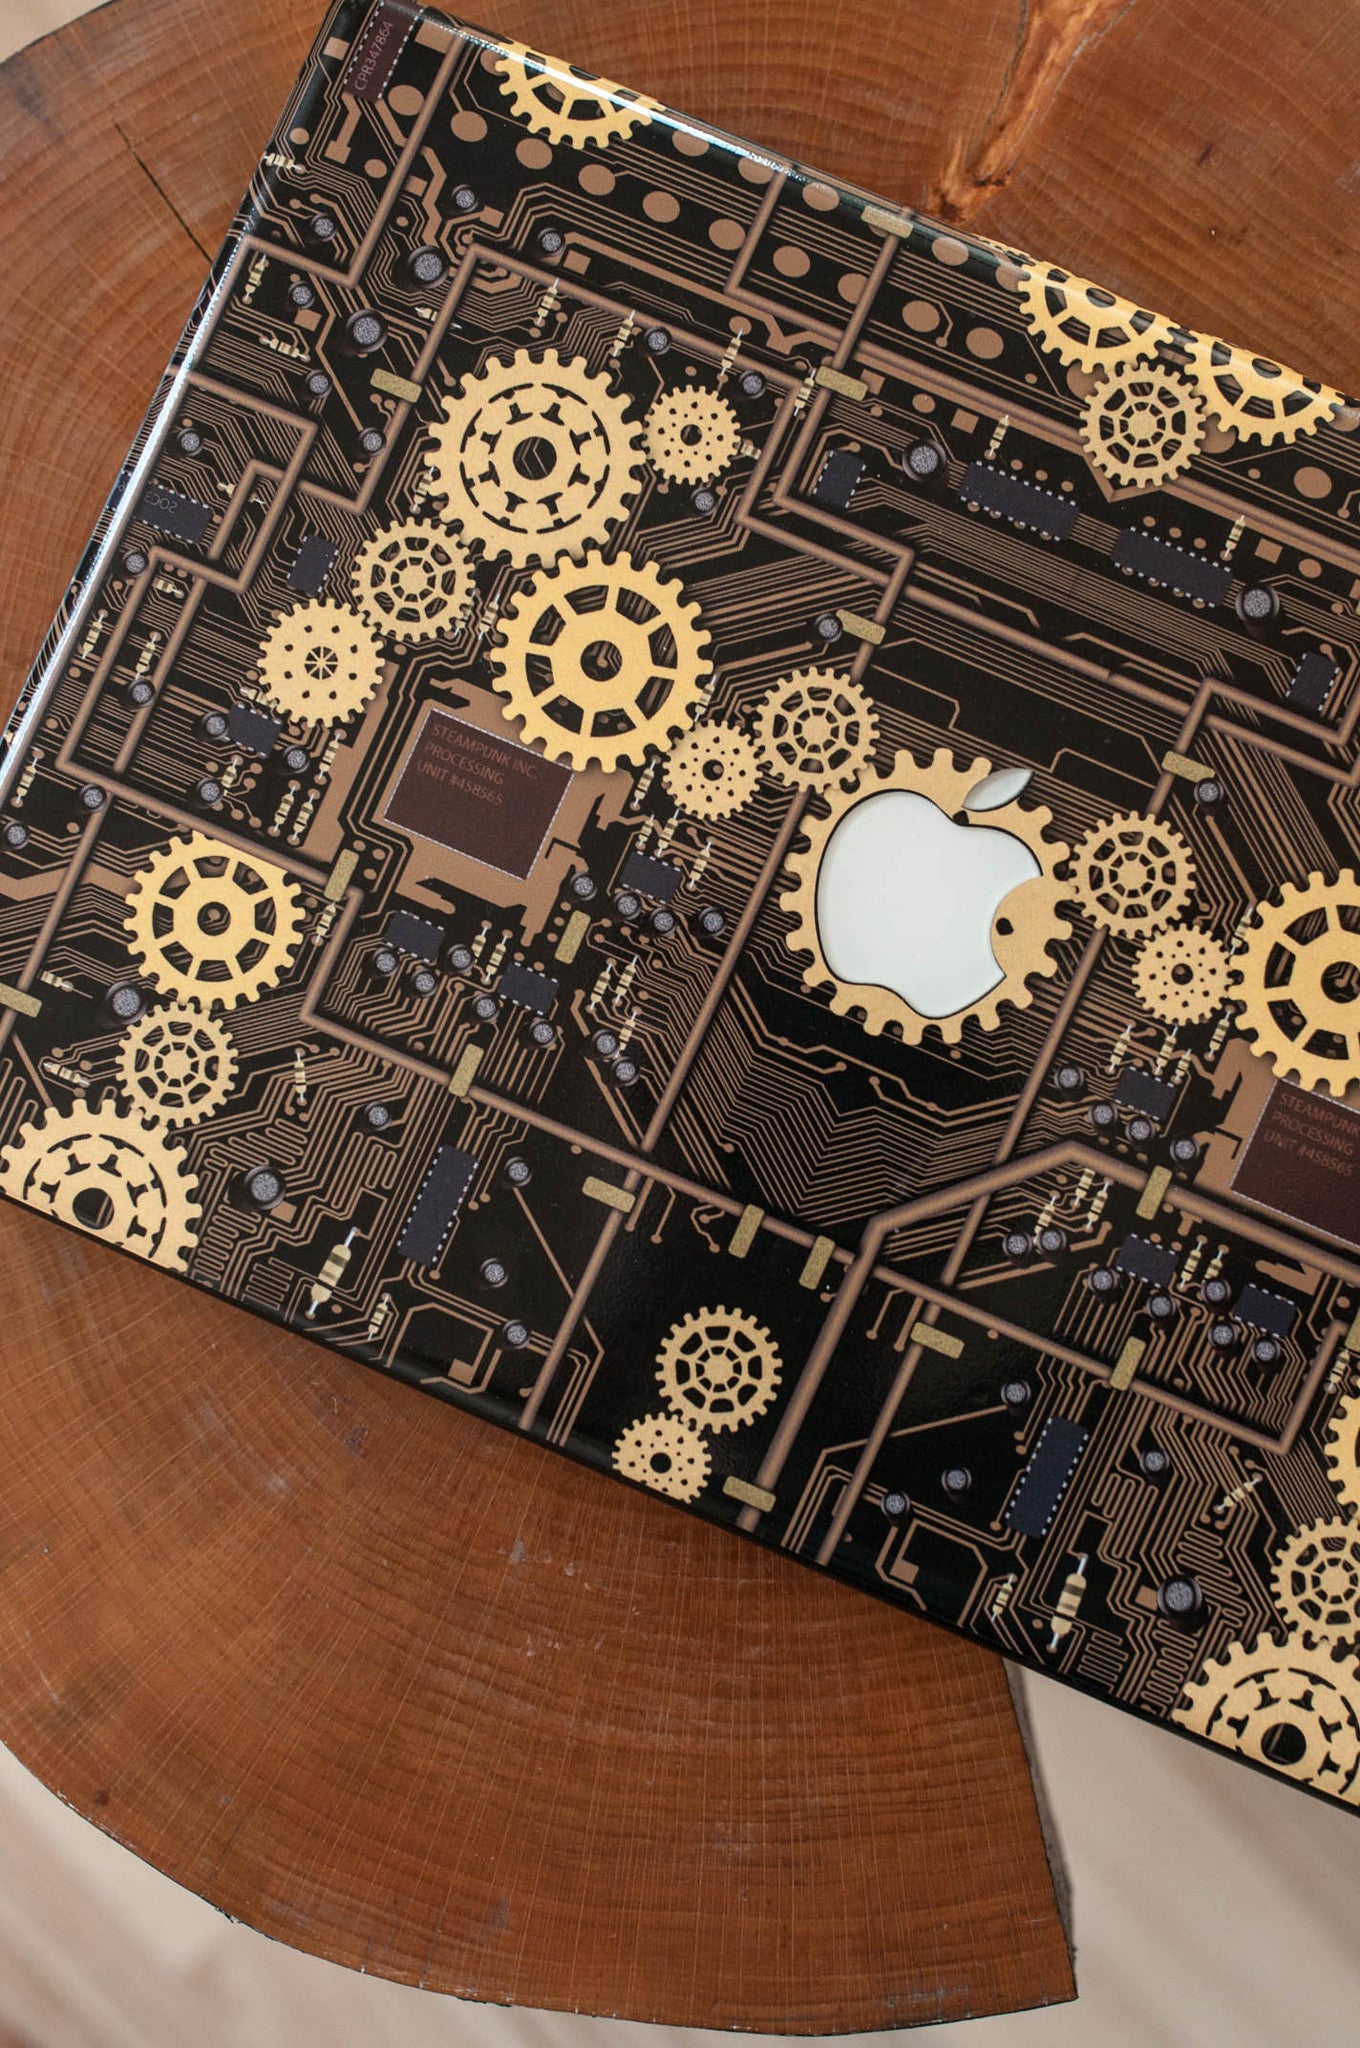 Steampunk MacBook Skin at Keyshorts.com - 4